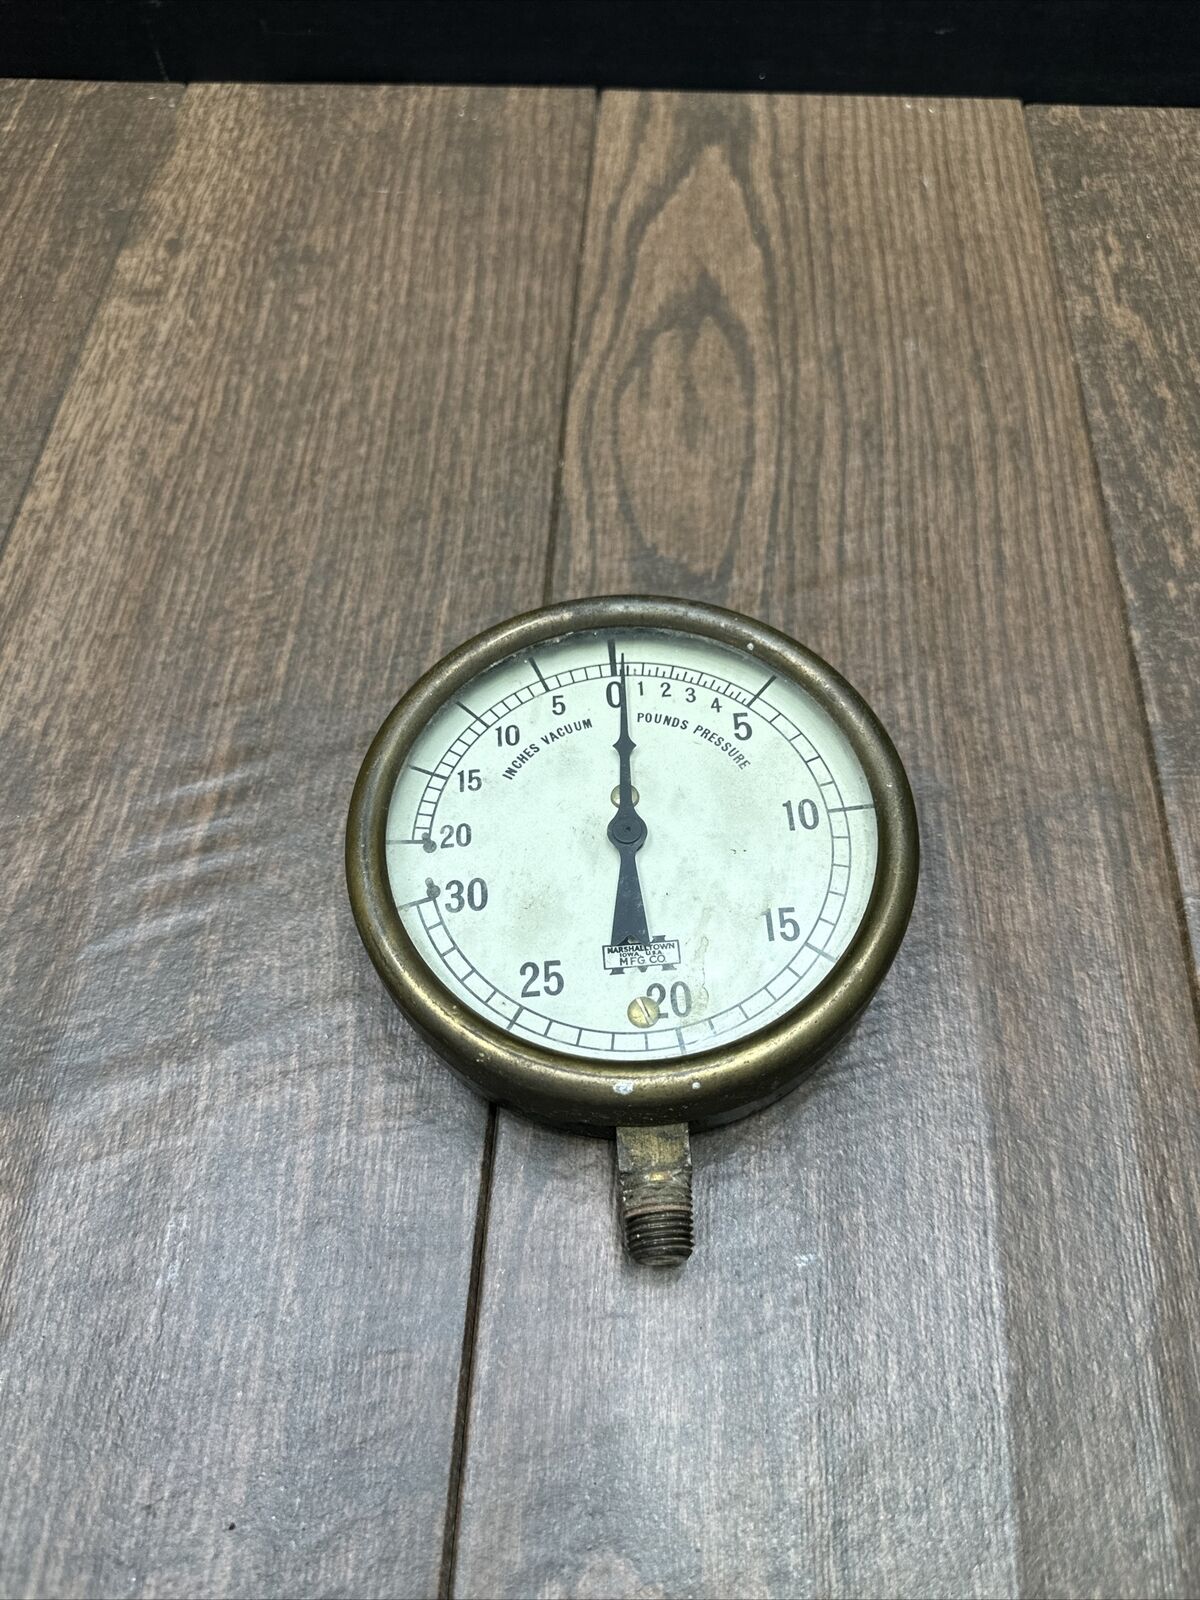 Vintage Pressure Gauge, Marshalltown Mfg. Co., Iowa, USA, Inches Vacuum Pressure